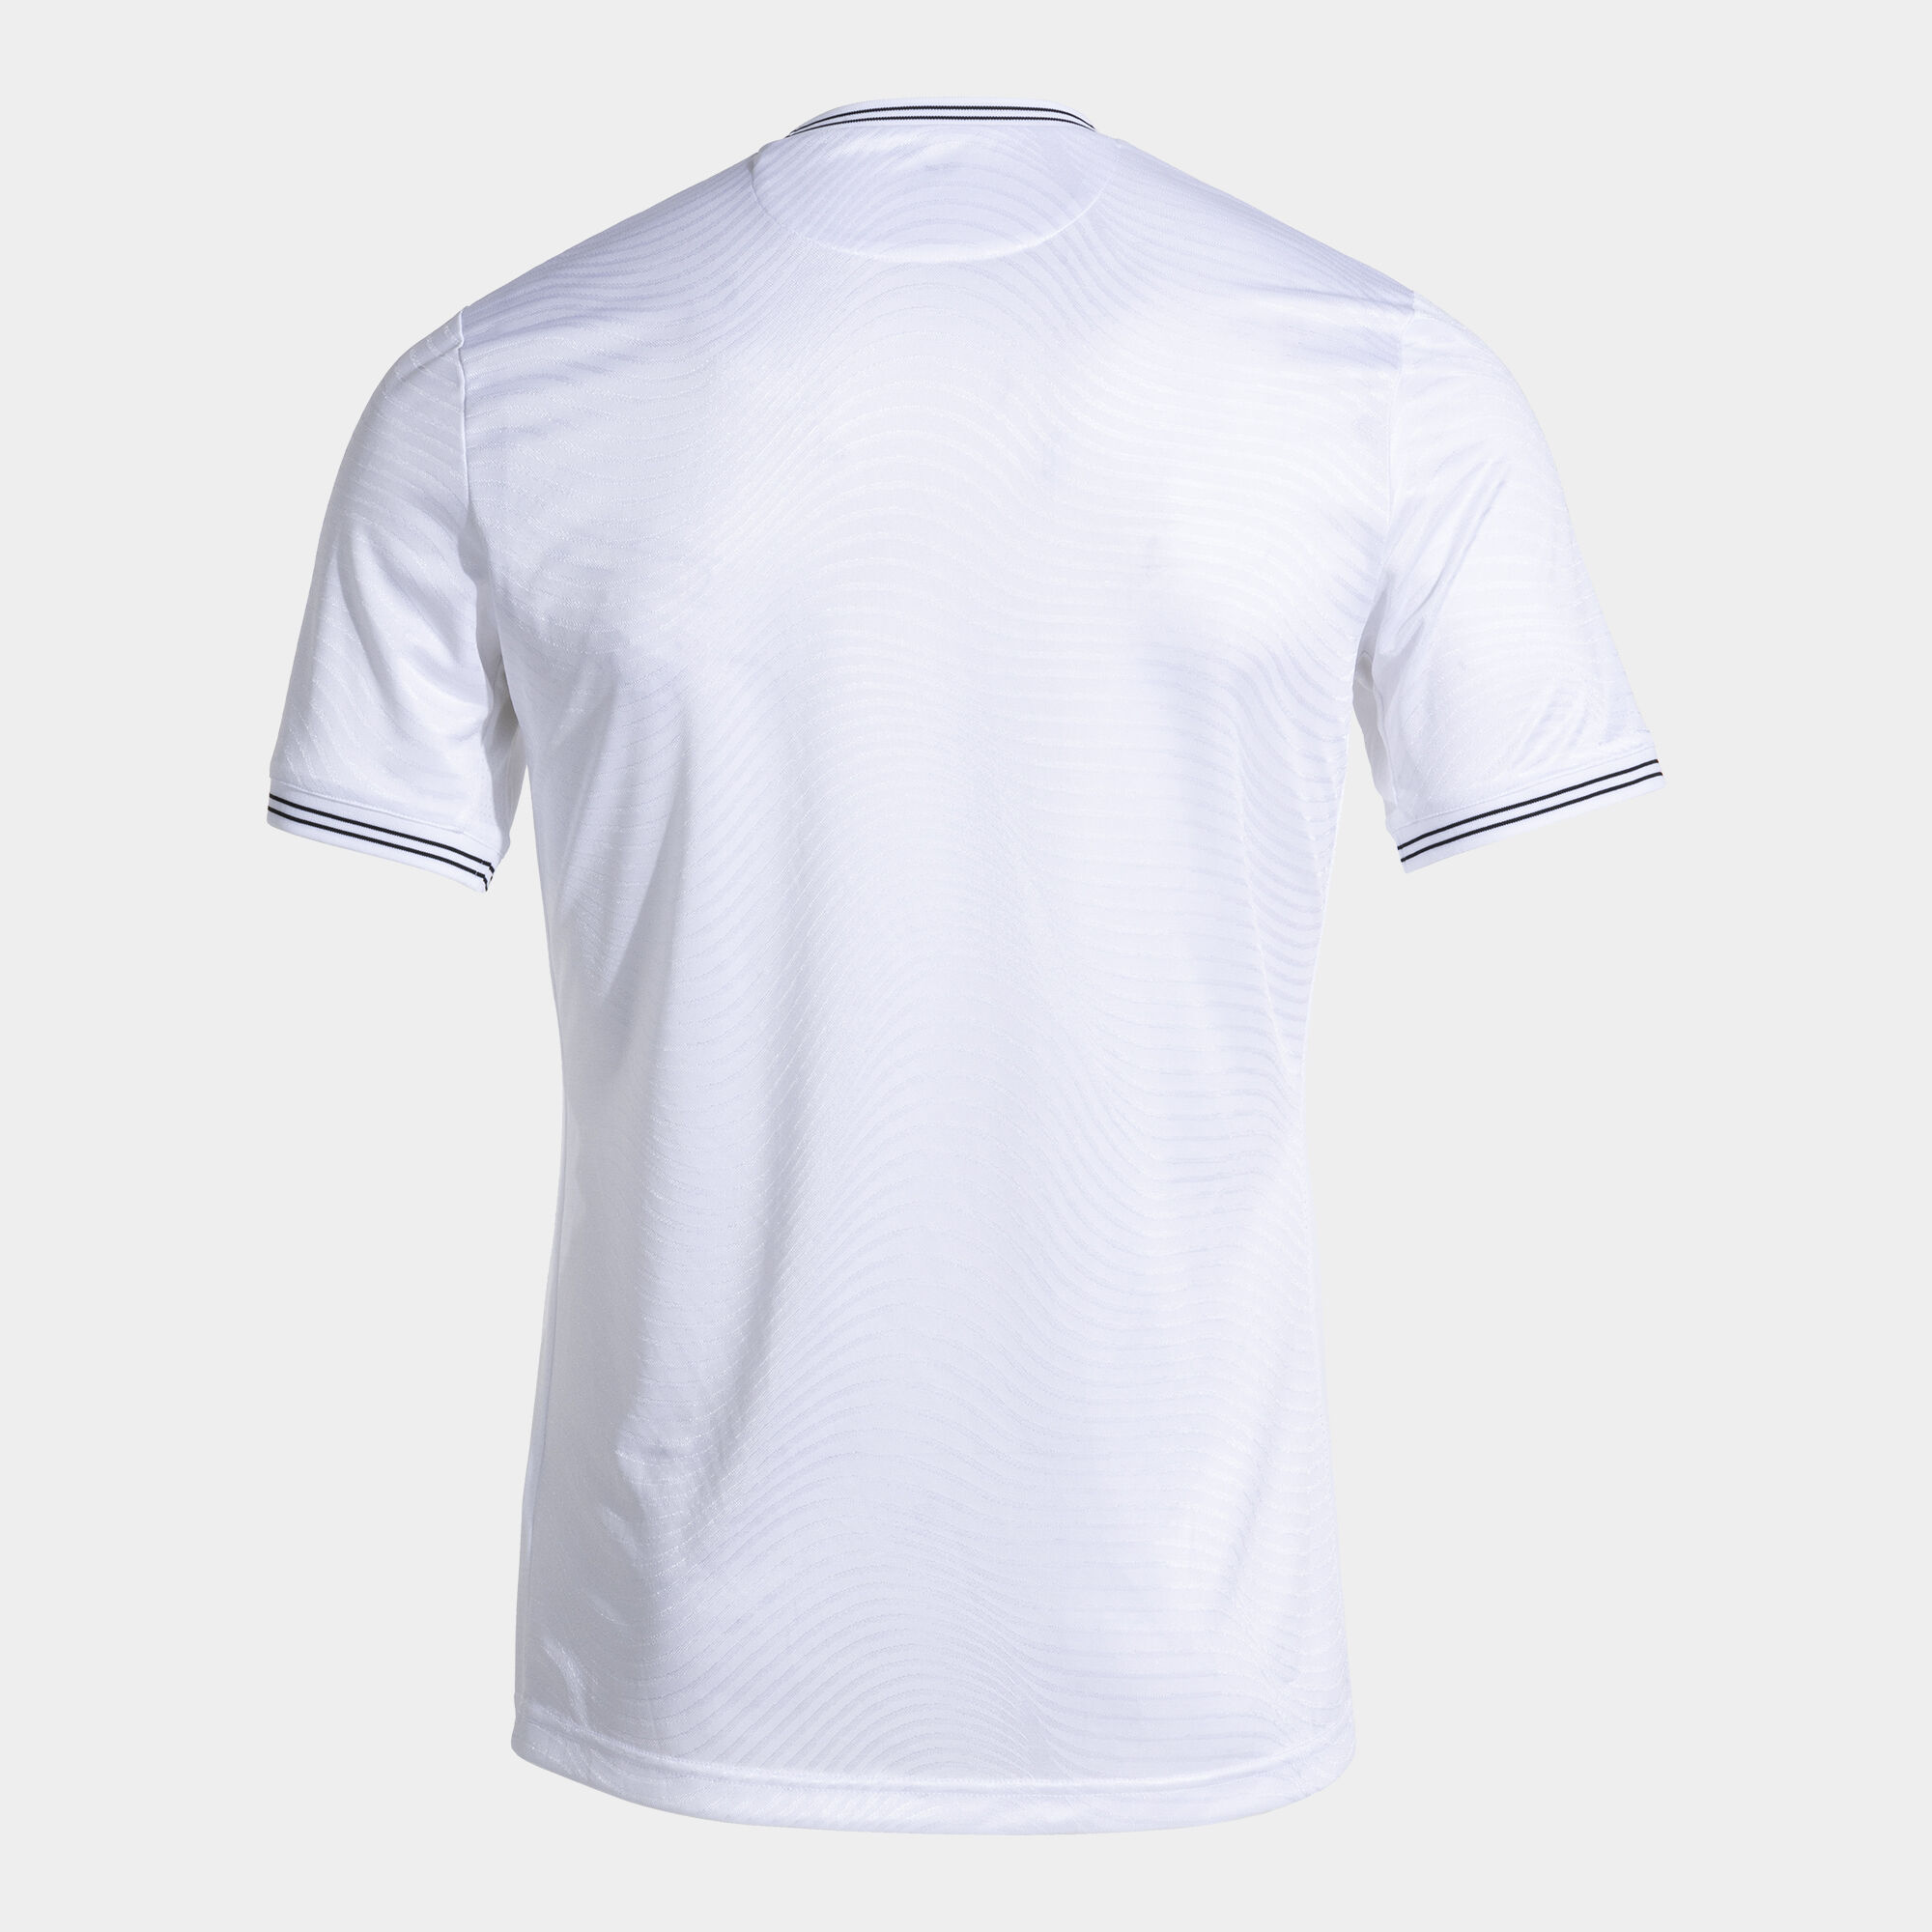 Shirt short sleeve man Toletum V white